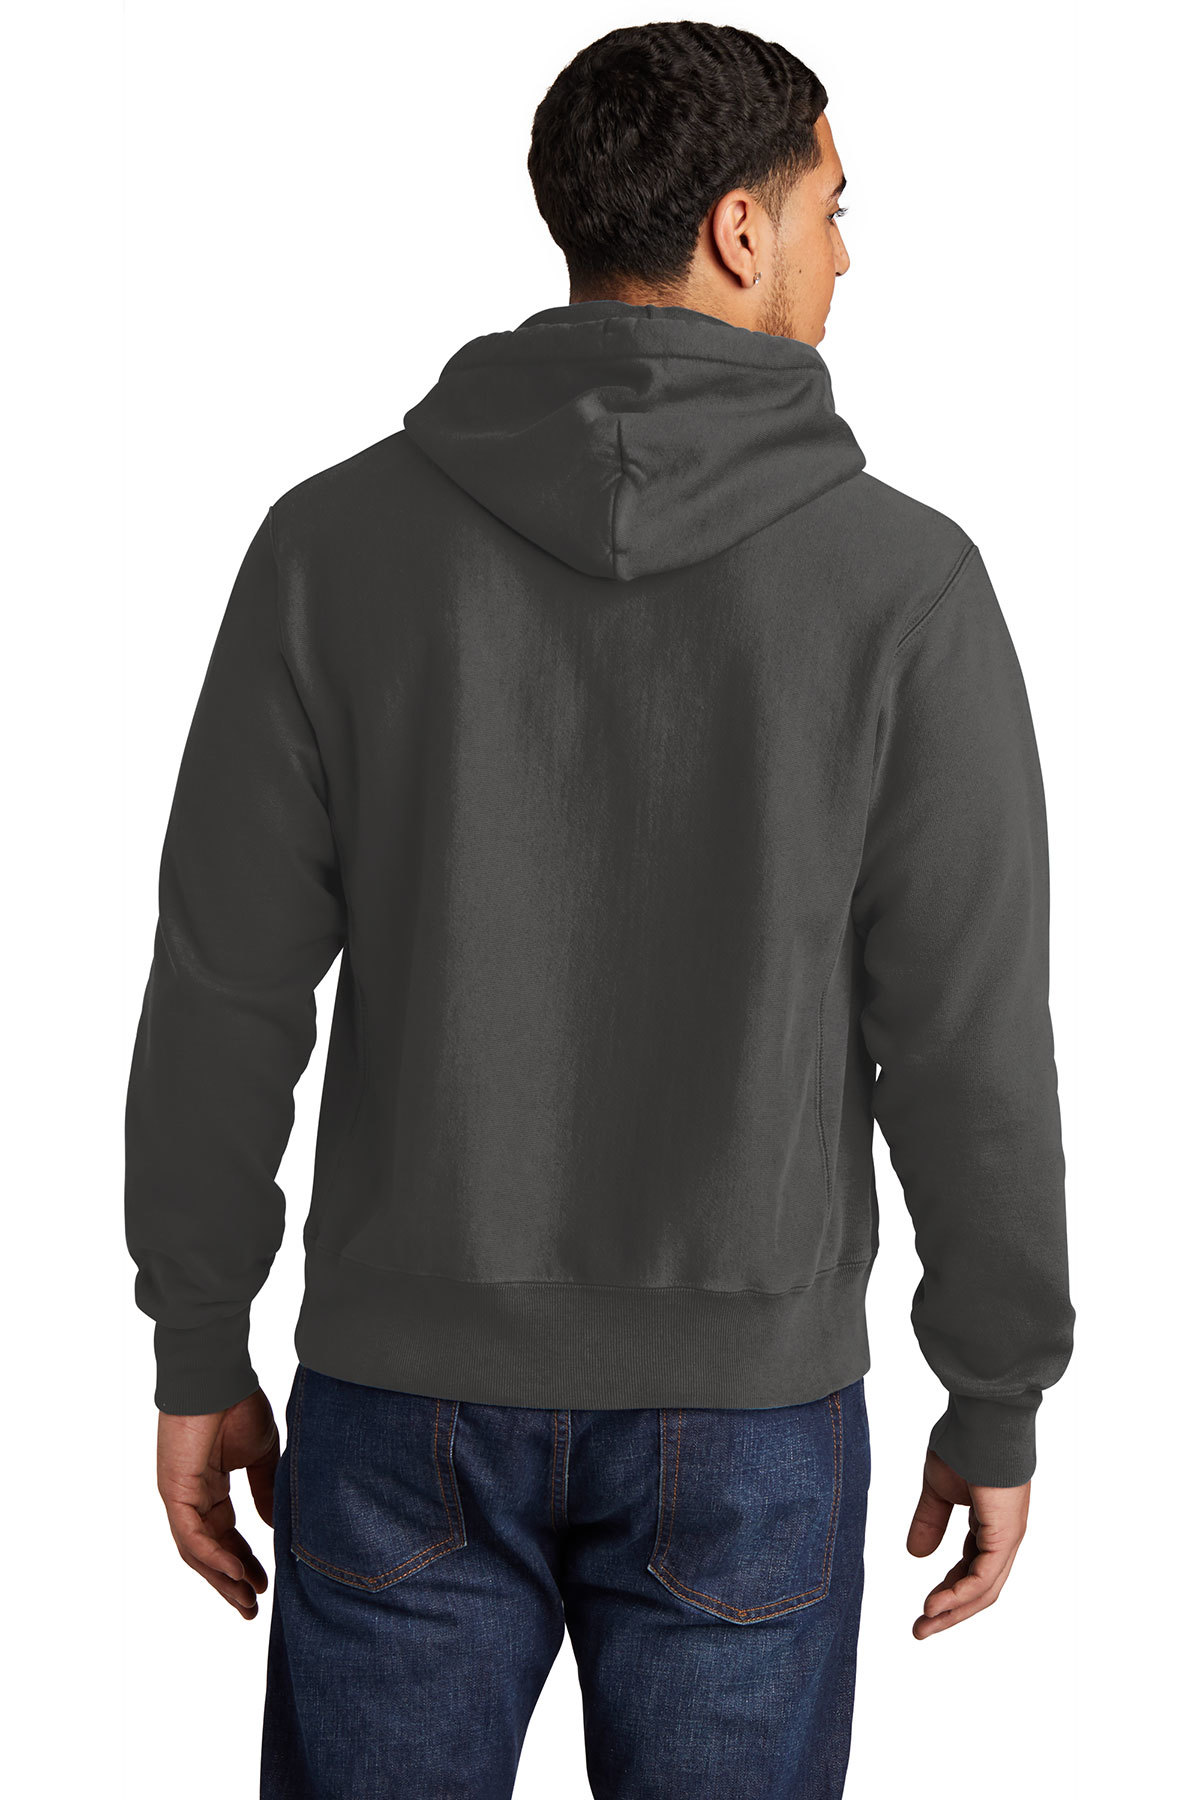 Champion Reverse Weave Garment-Dyed Hooded Sweatshirt | Product ...